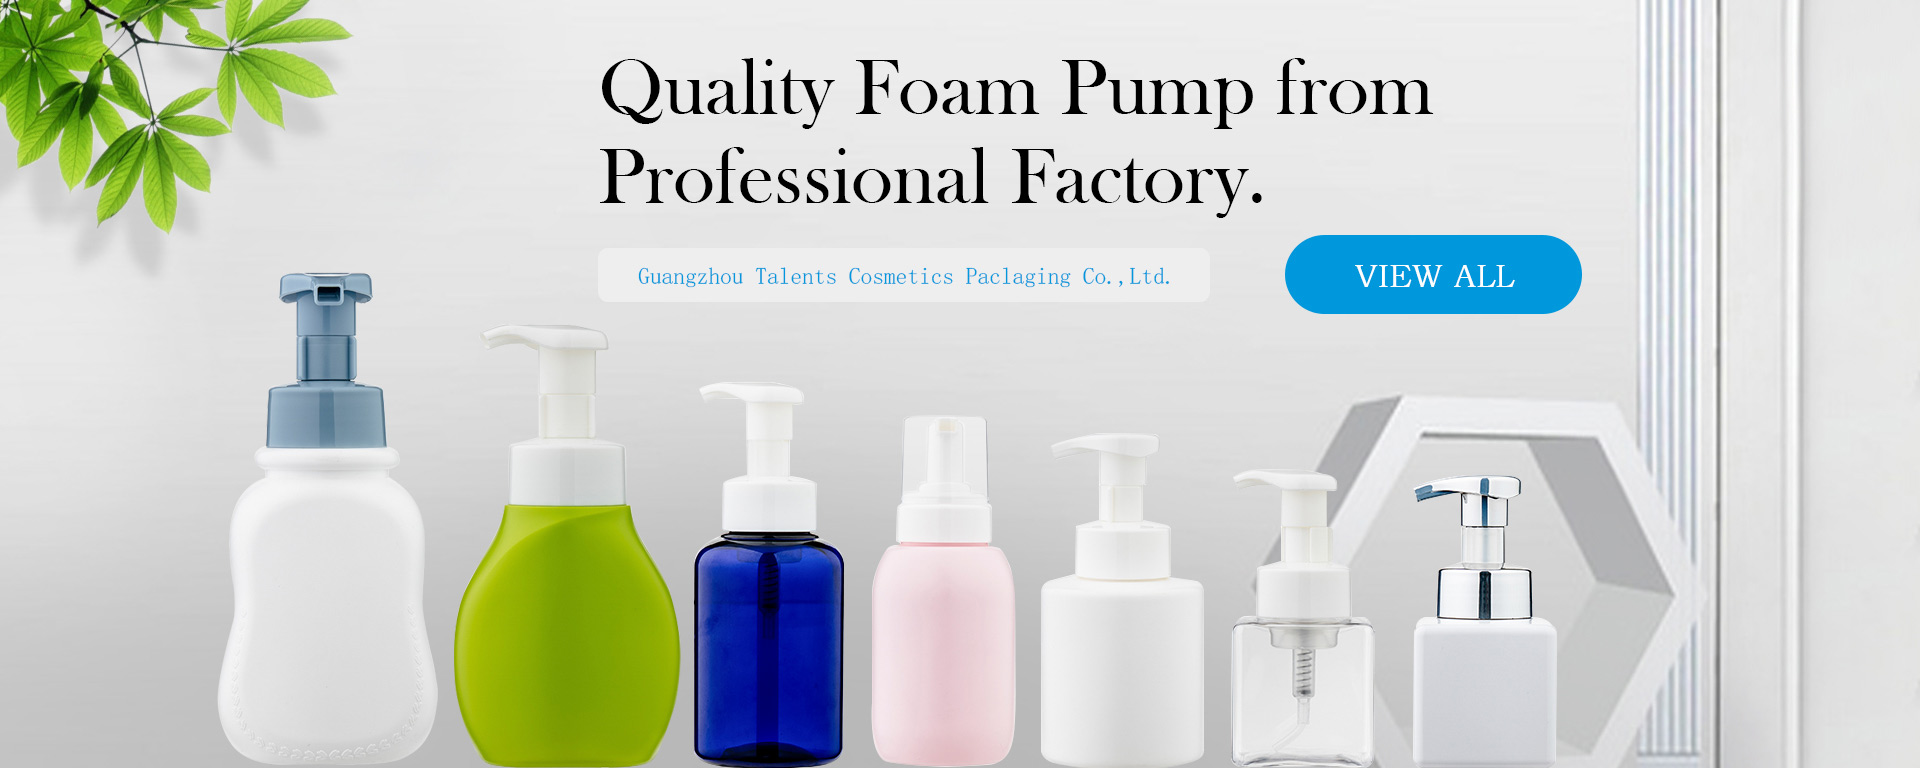 China foam pump supplier